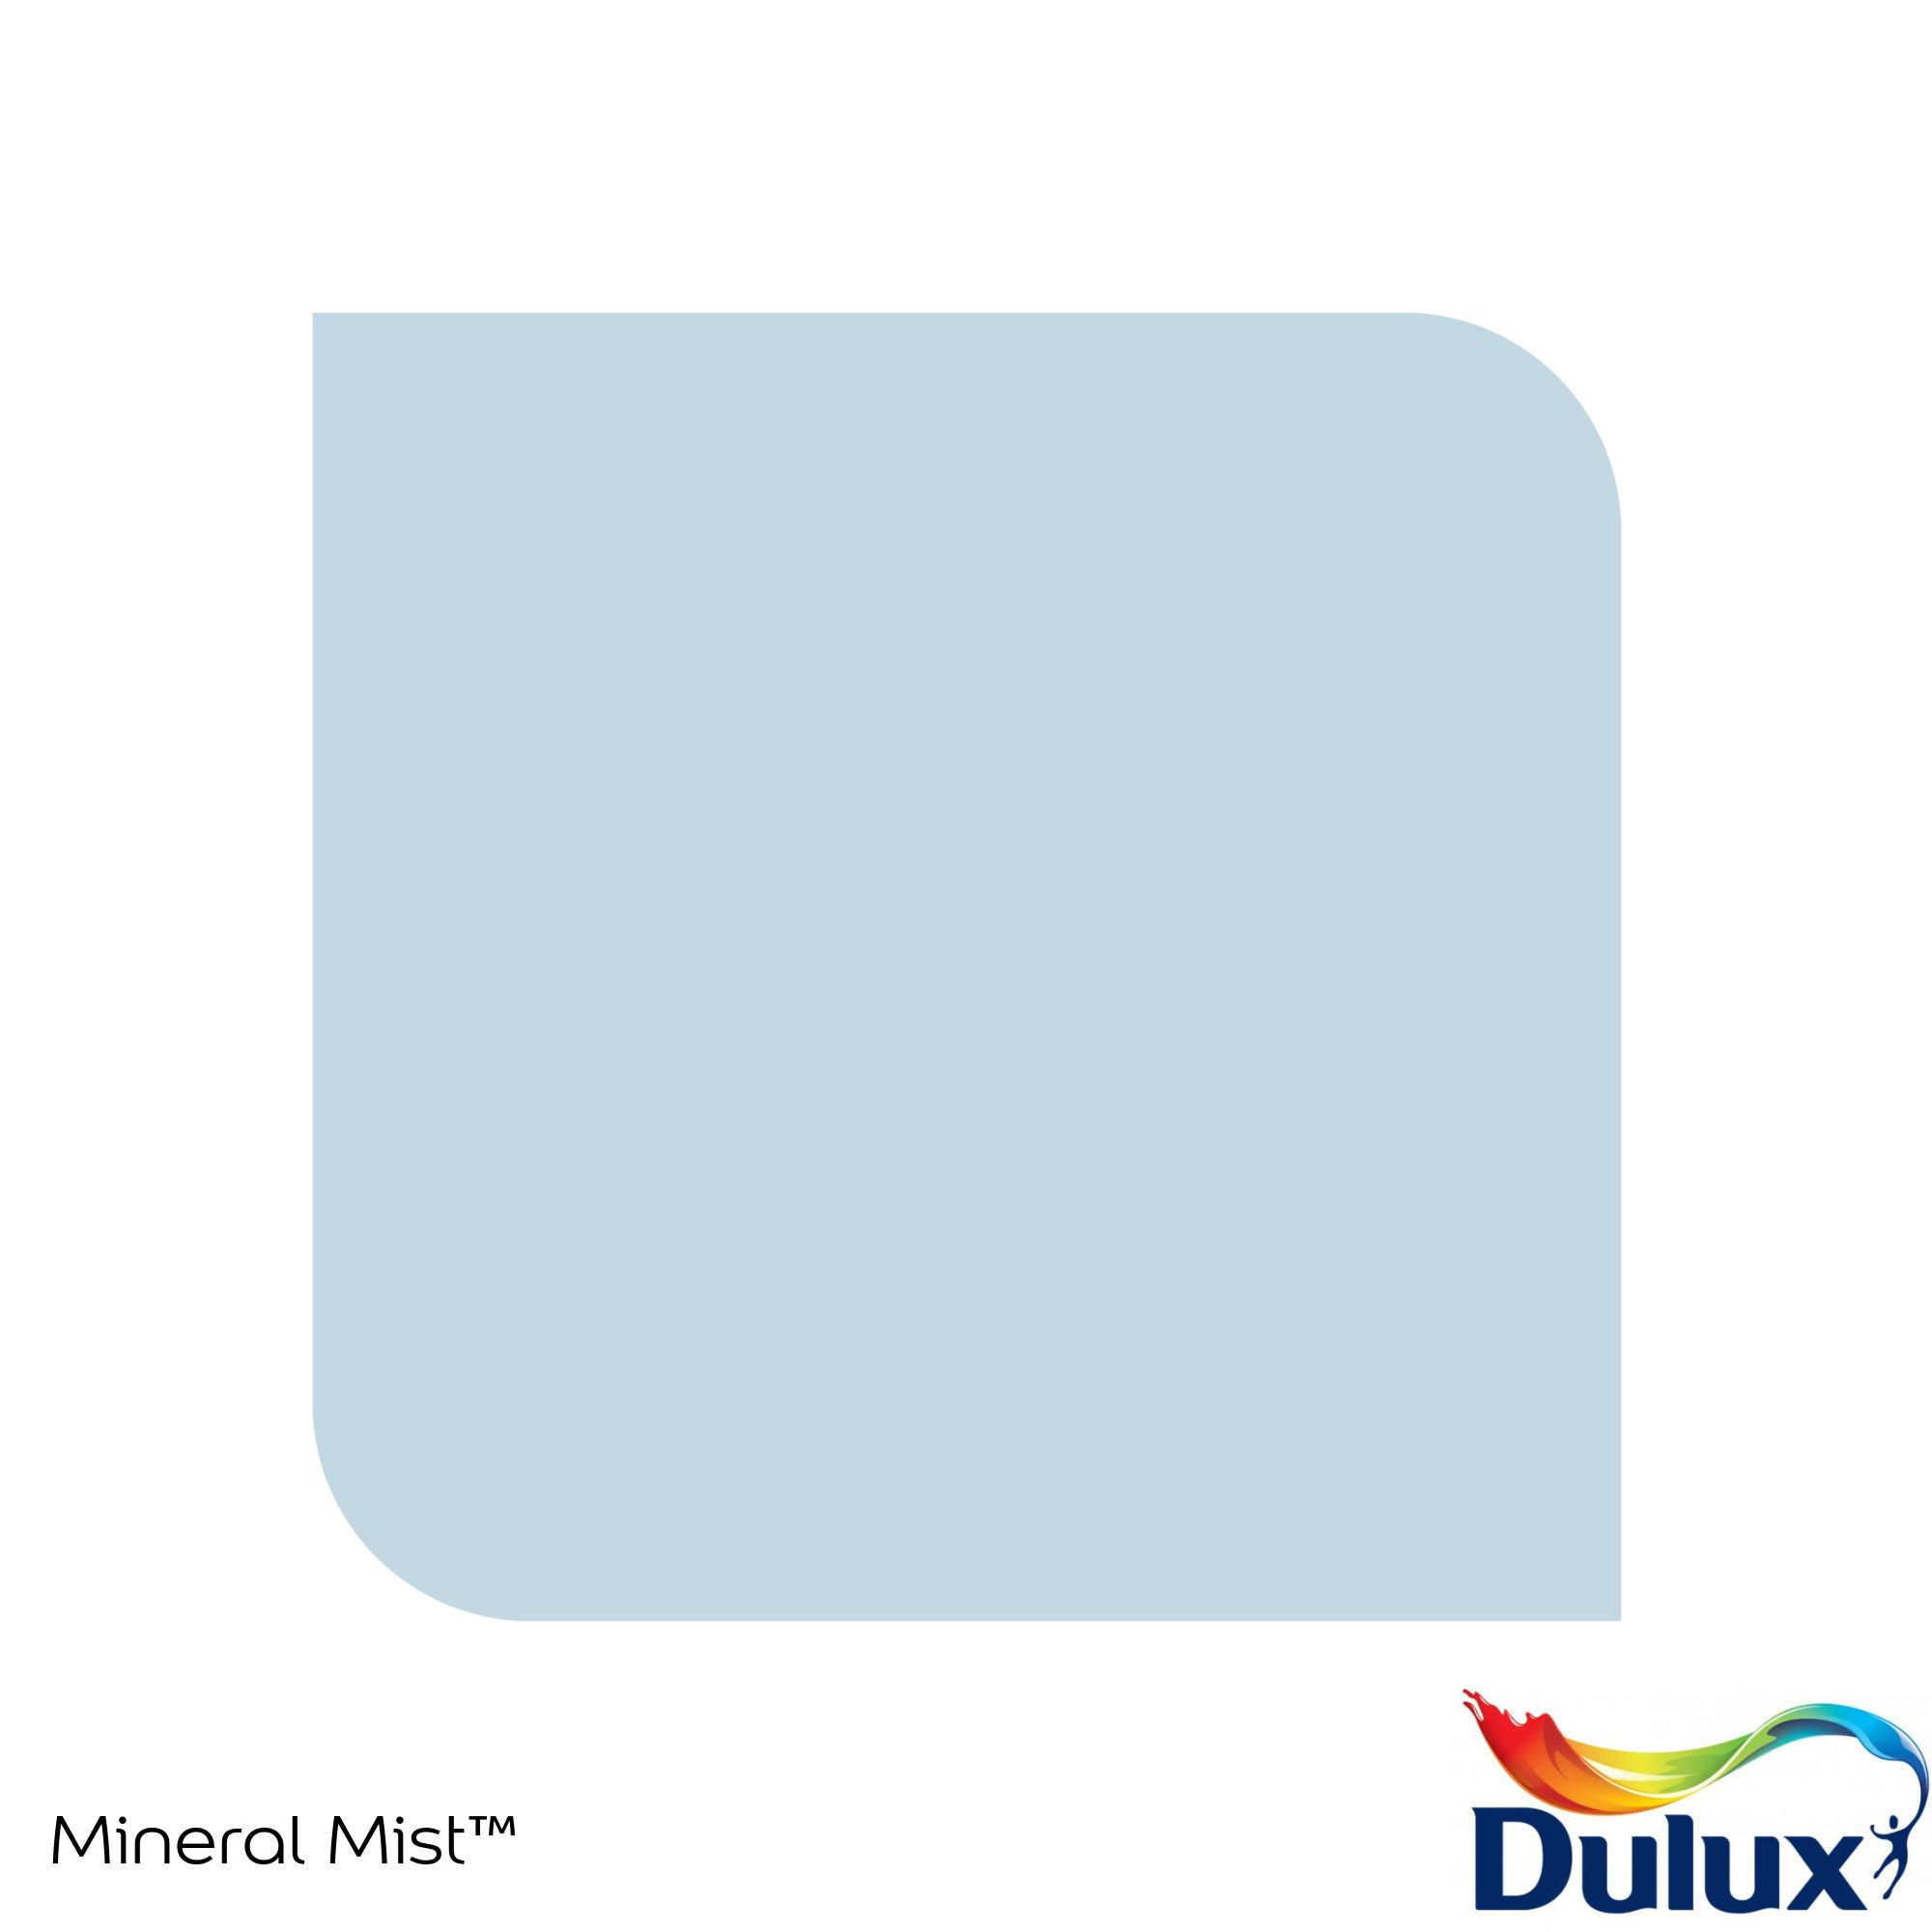 Dulux Standard Mineral mist Matt Emulsion paint, 30ml